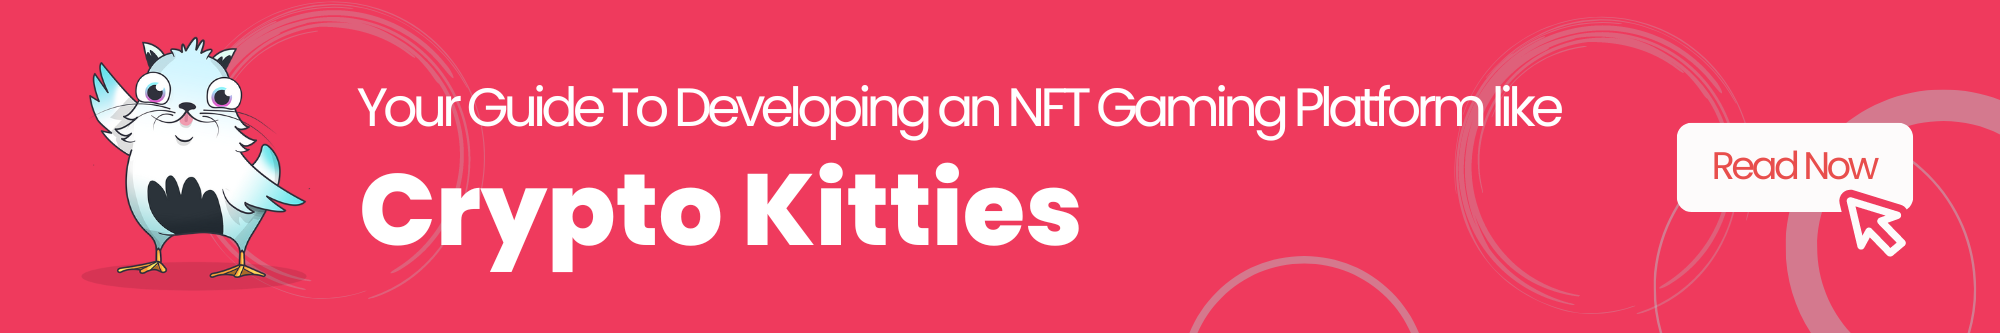 NFT Gaming Platform like Crypto Kitties